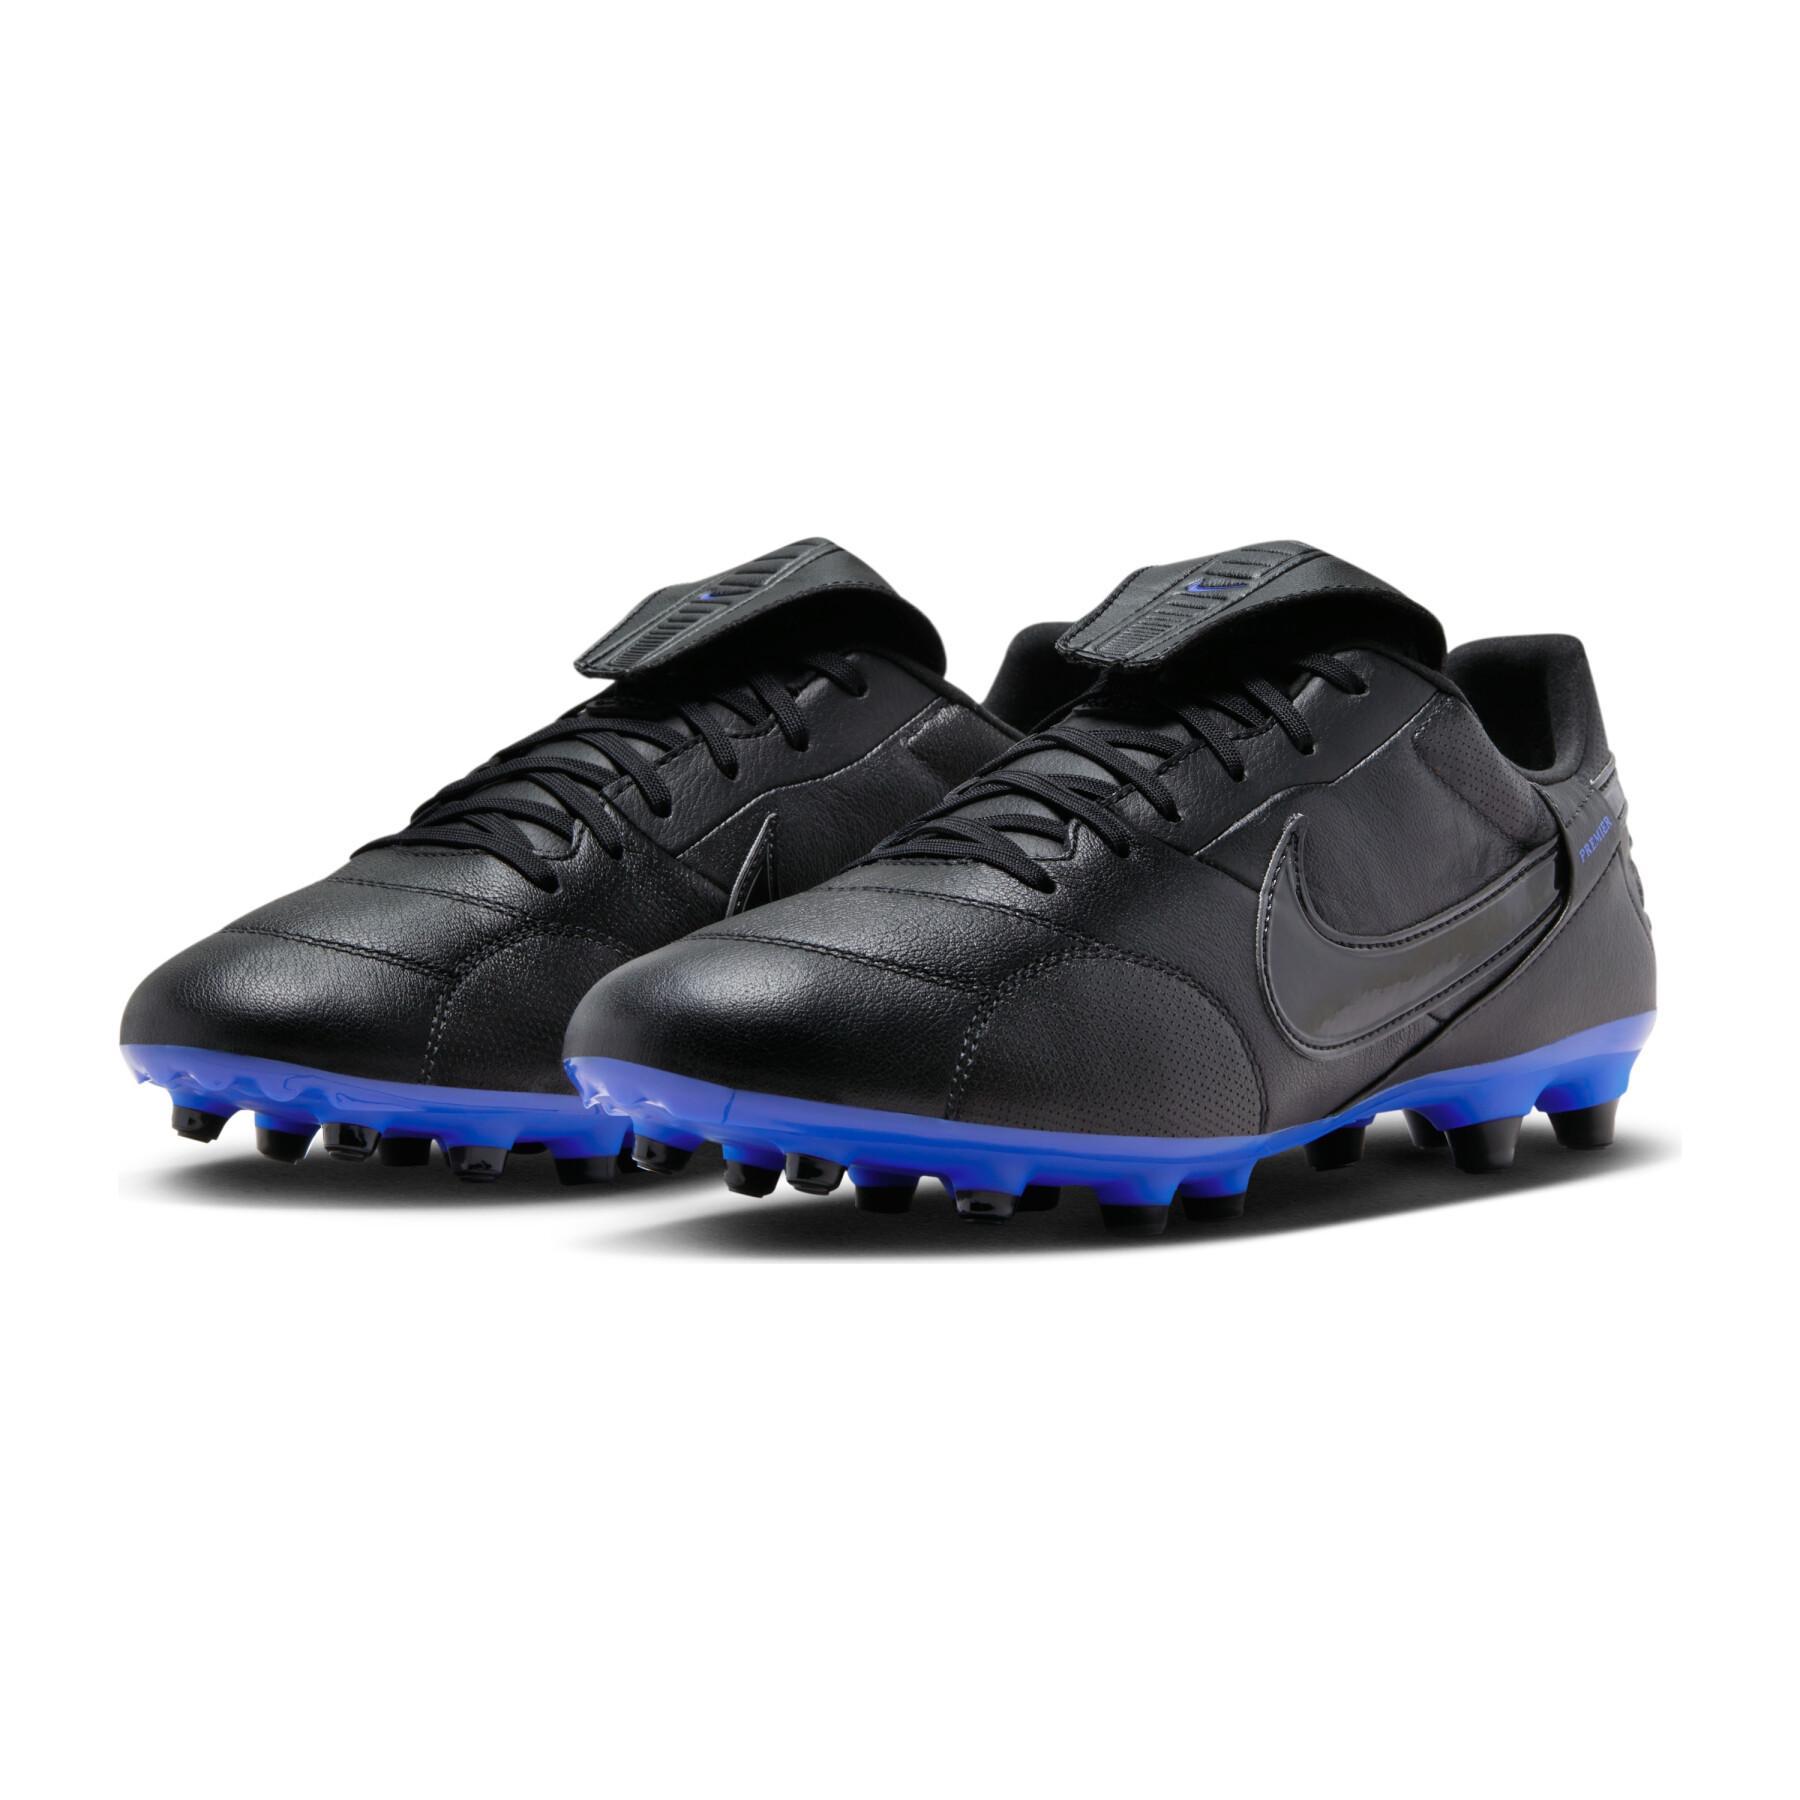 Soccer cleats Nike Premier 3 FG